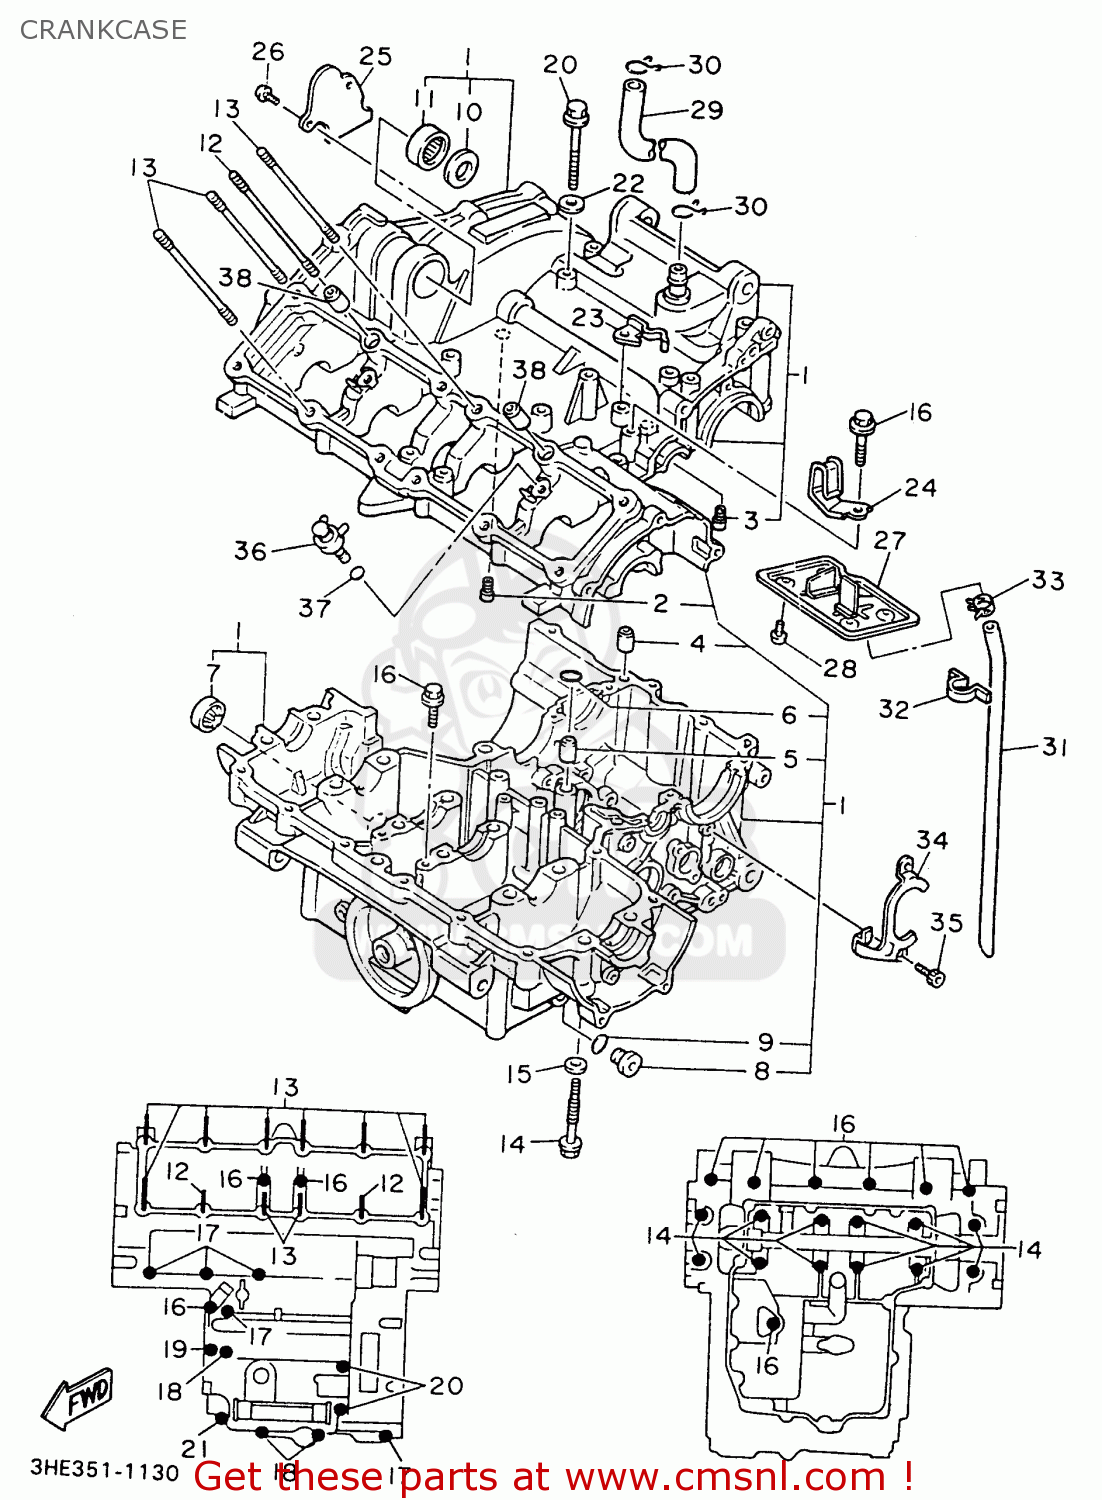 fzr 250 wiring diagram